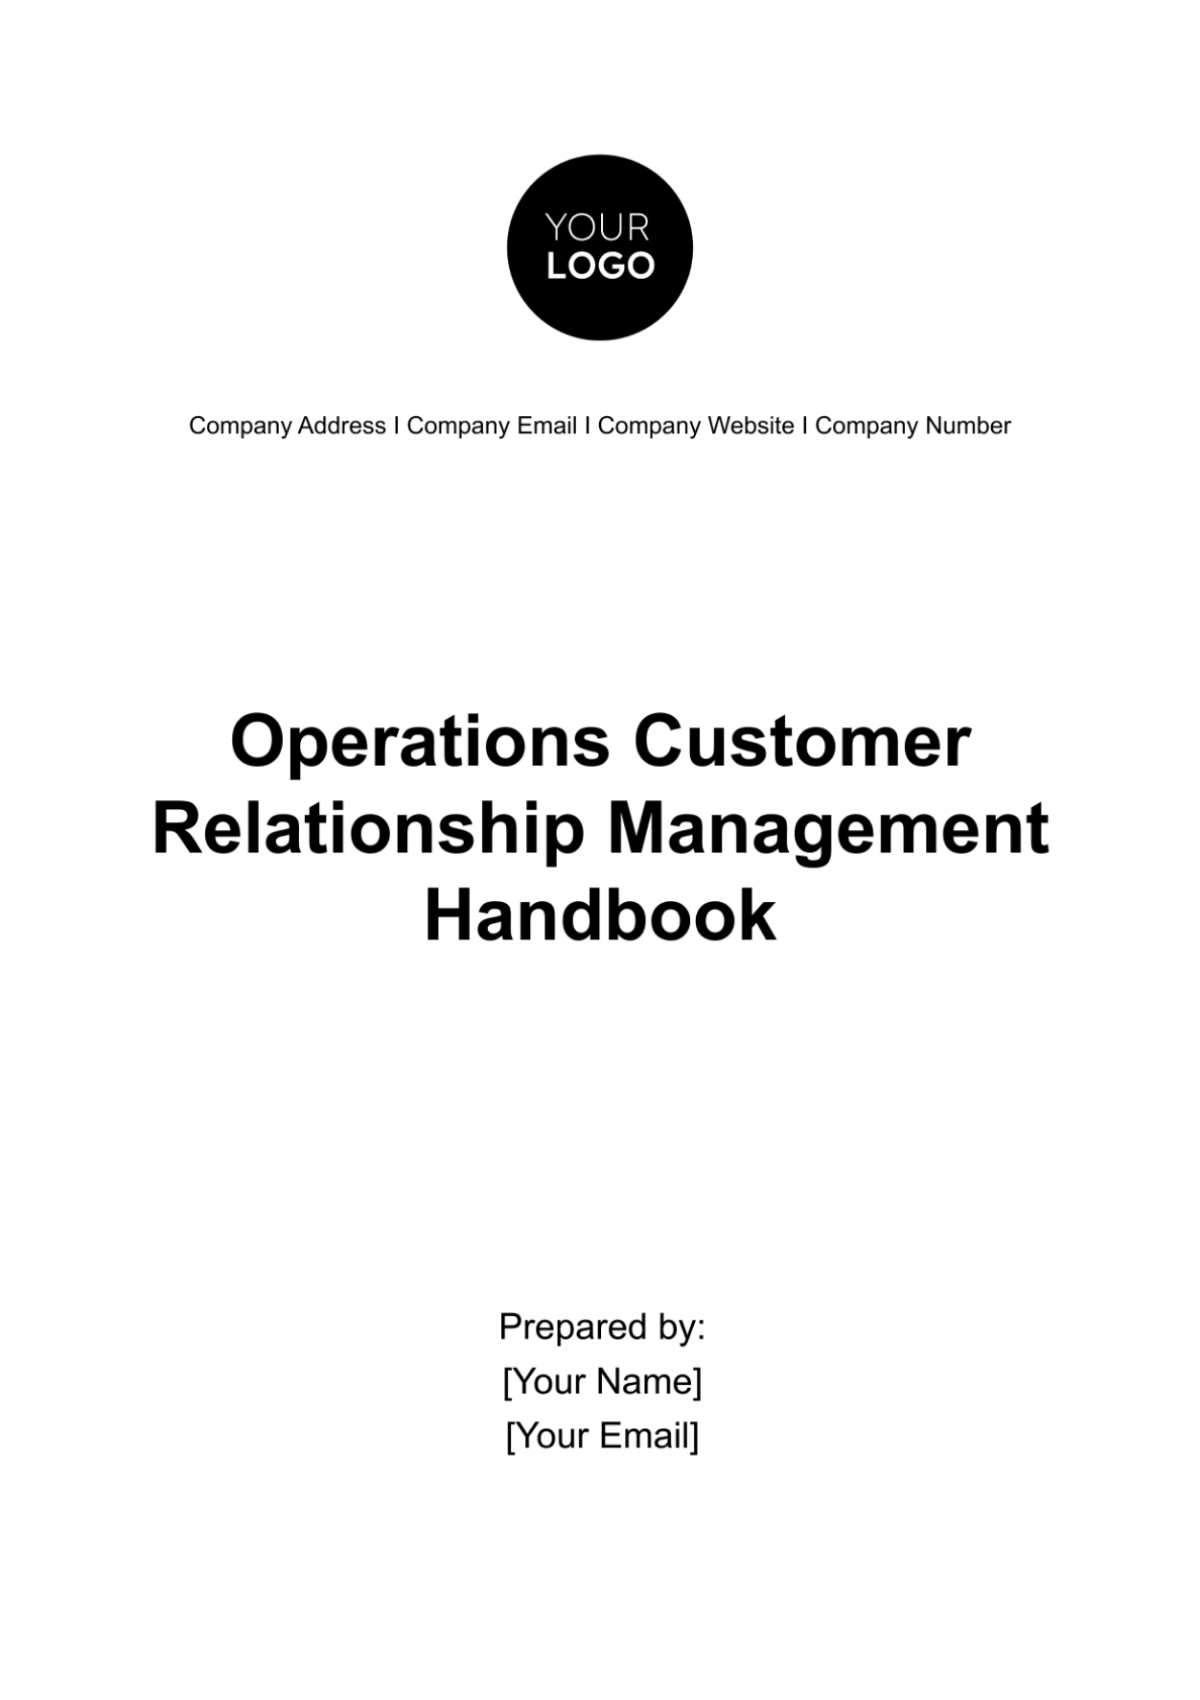 Operations Customer Relationship Management Handbook Template